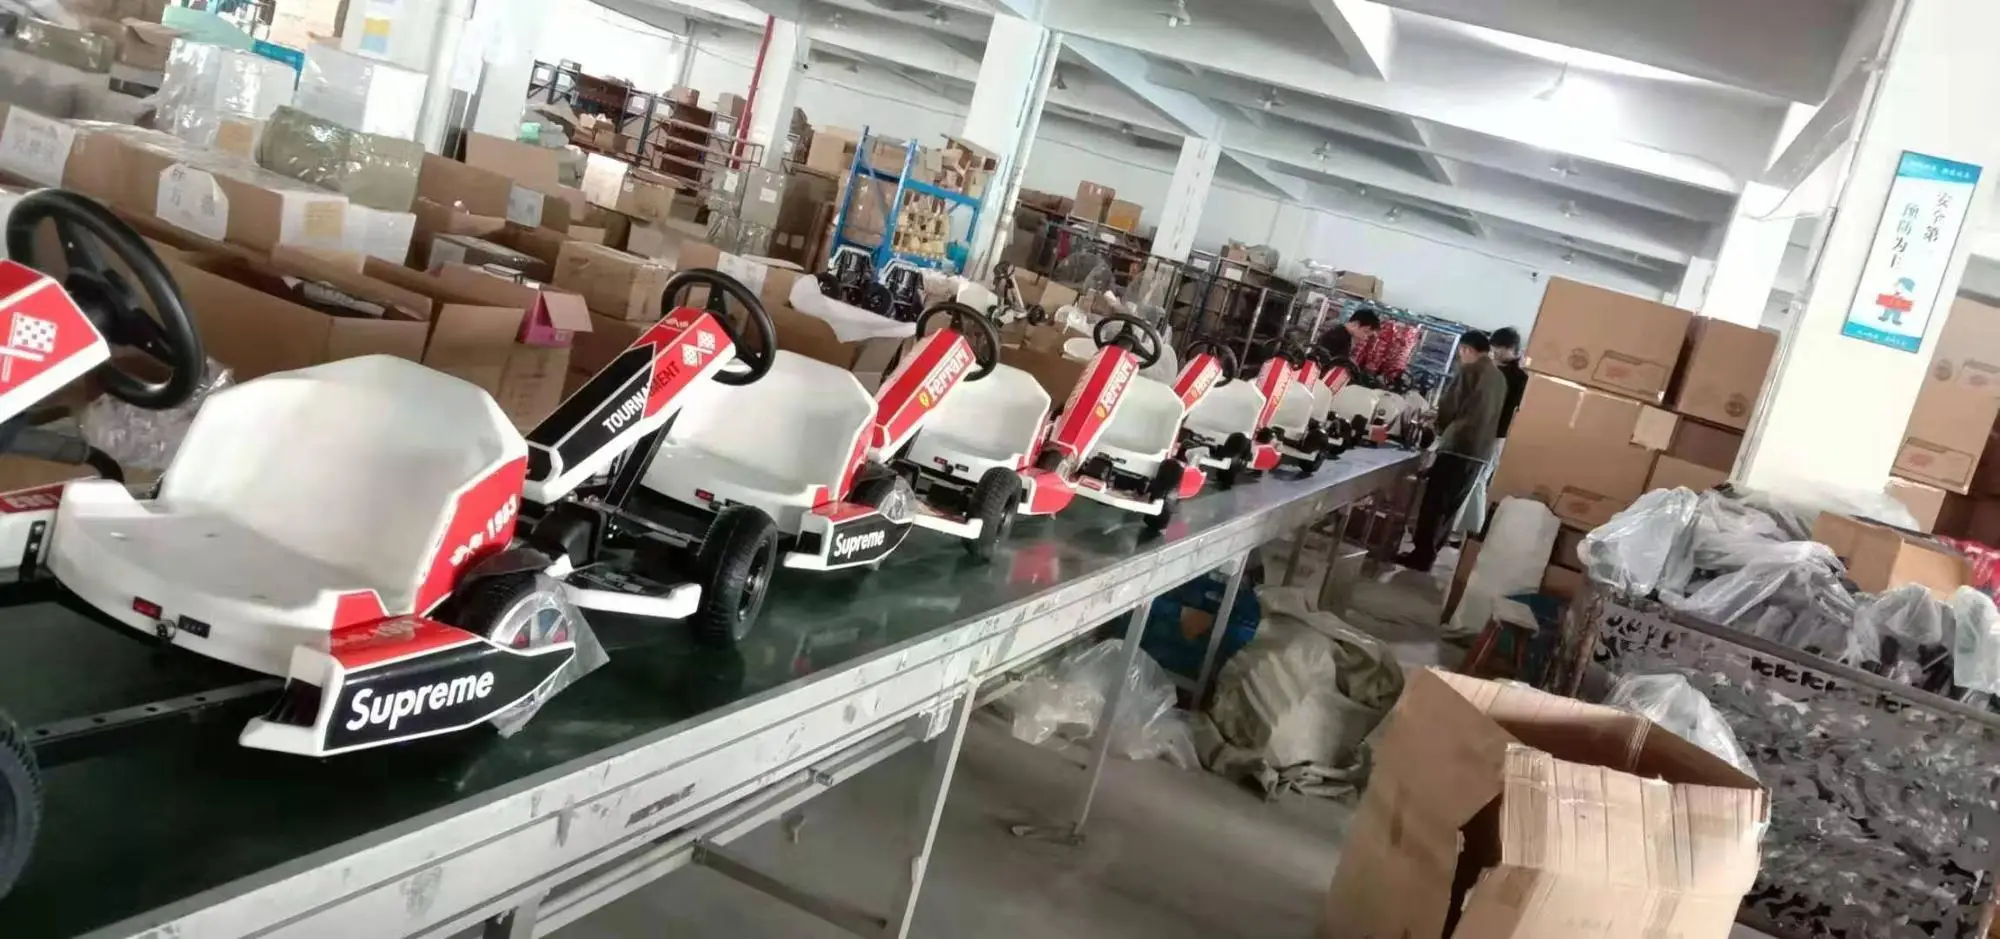 
Good Business Custom Street Legal 200cc Engine Adult/ Kids Racing Electric Go Karts Karting Cars for Sale 